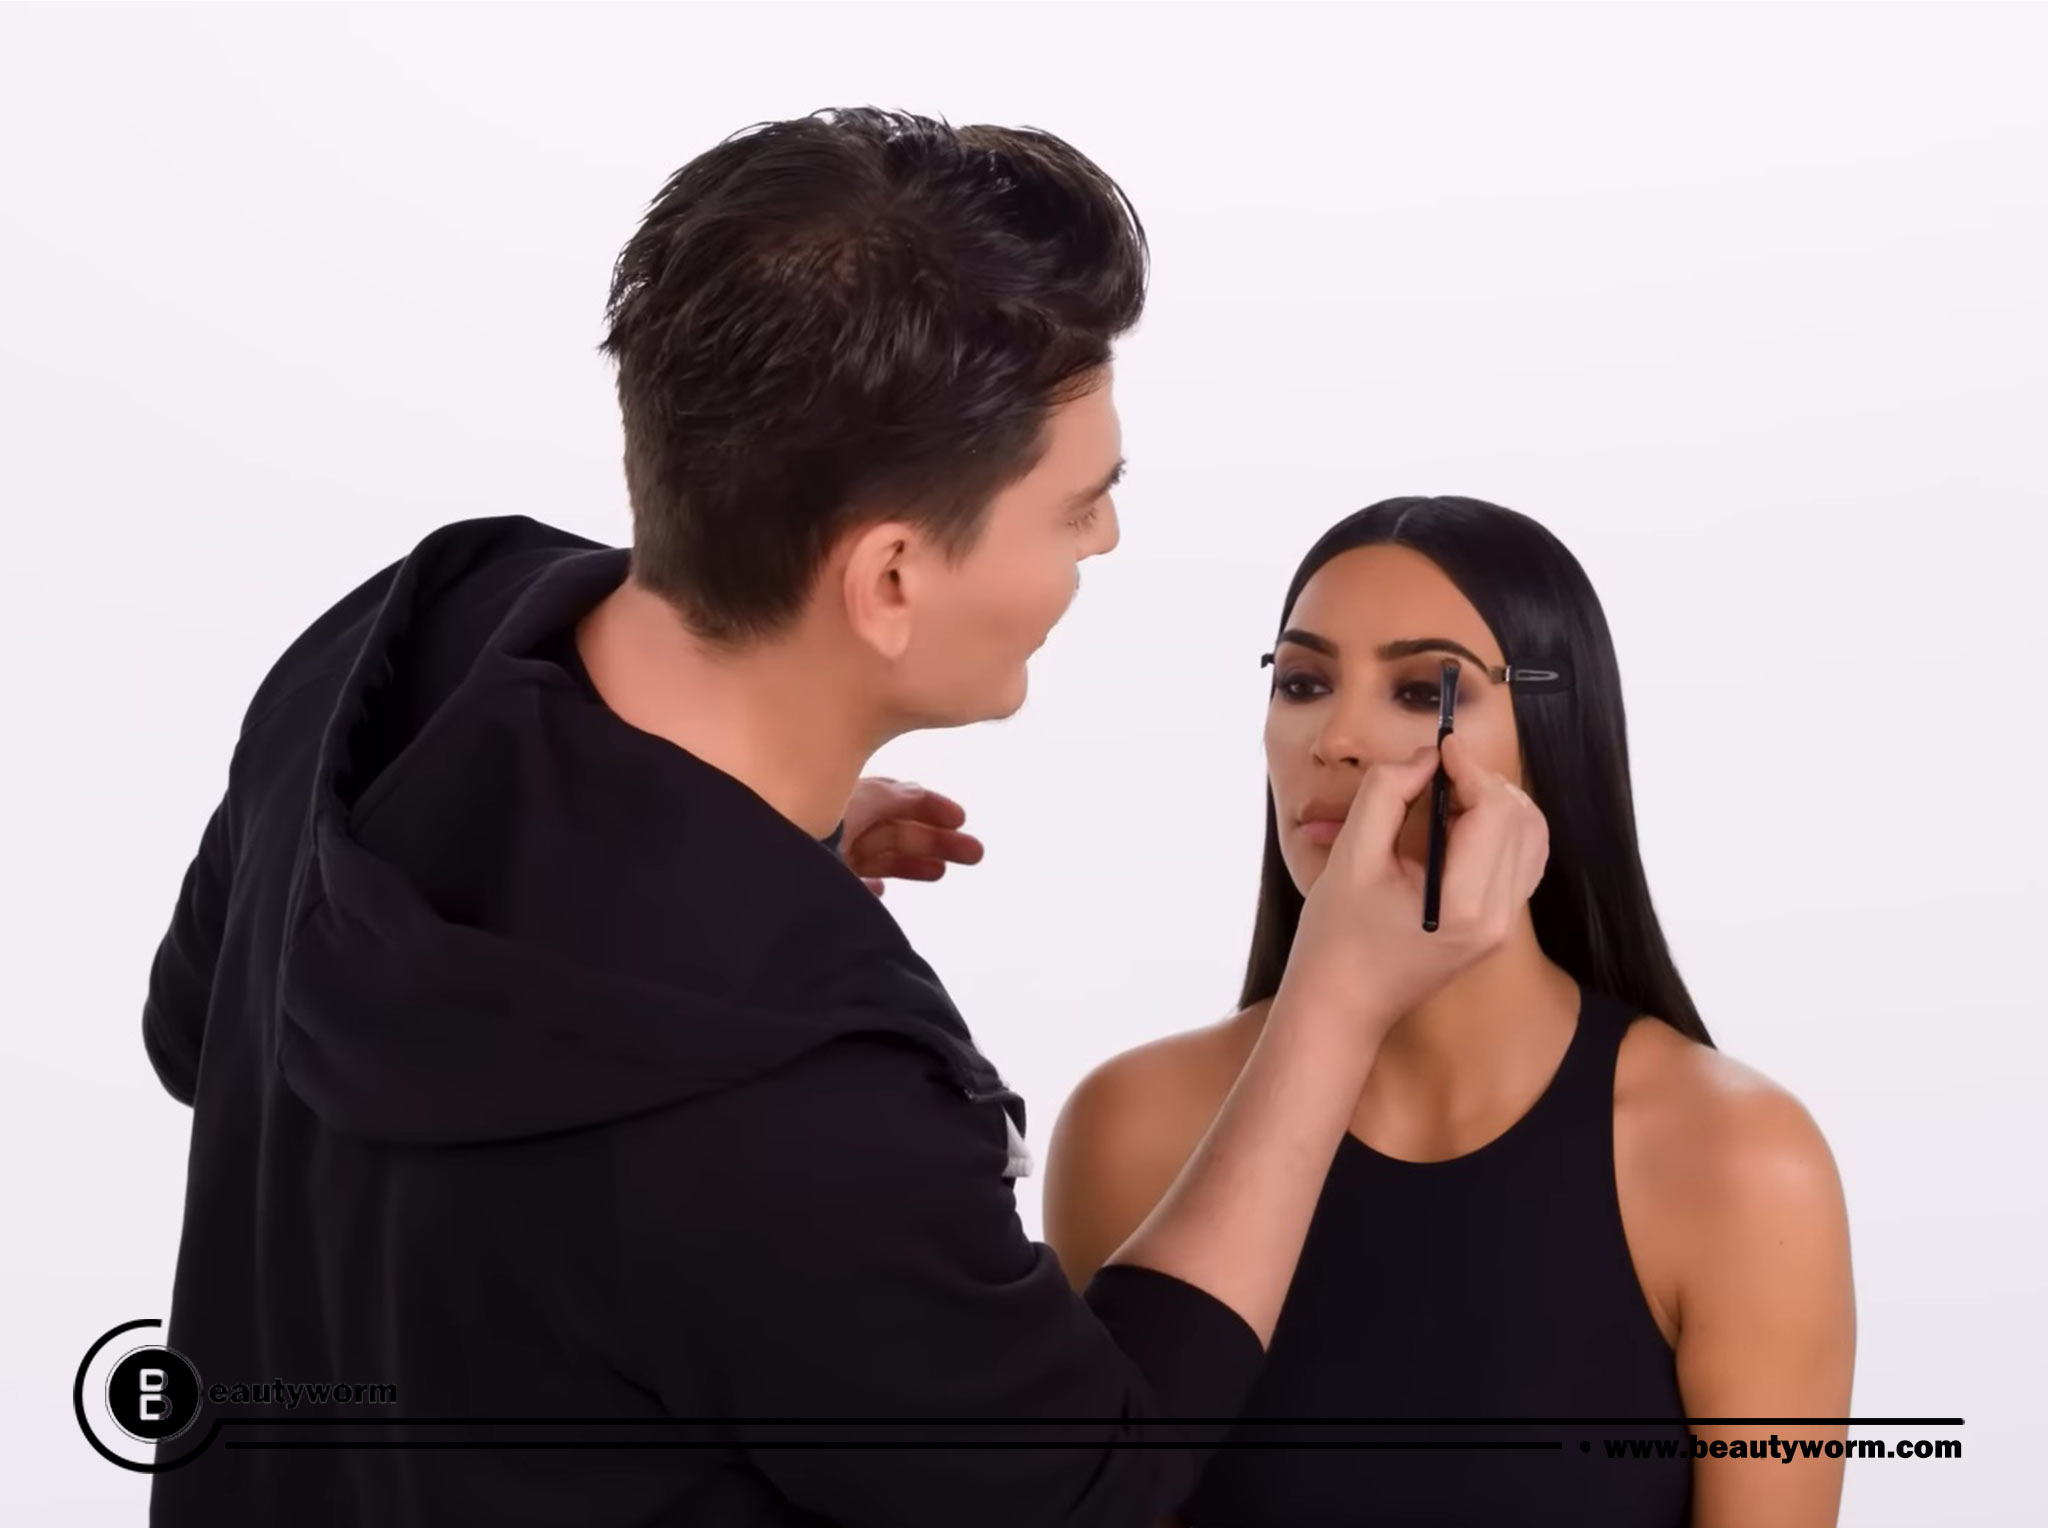 Who is Kim Kardashian's makeup artist?